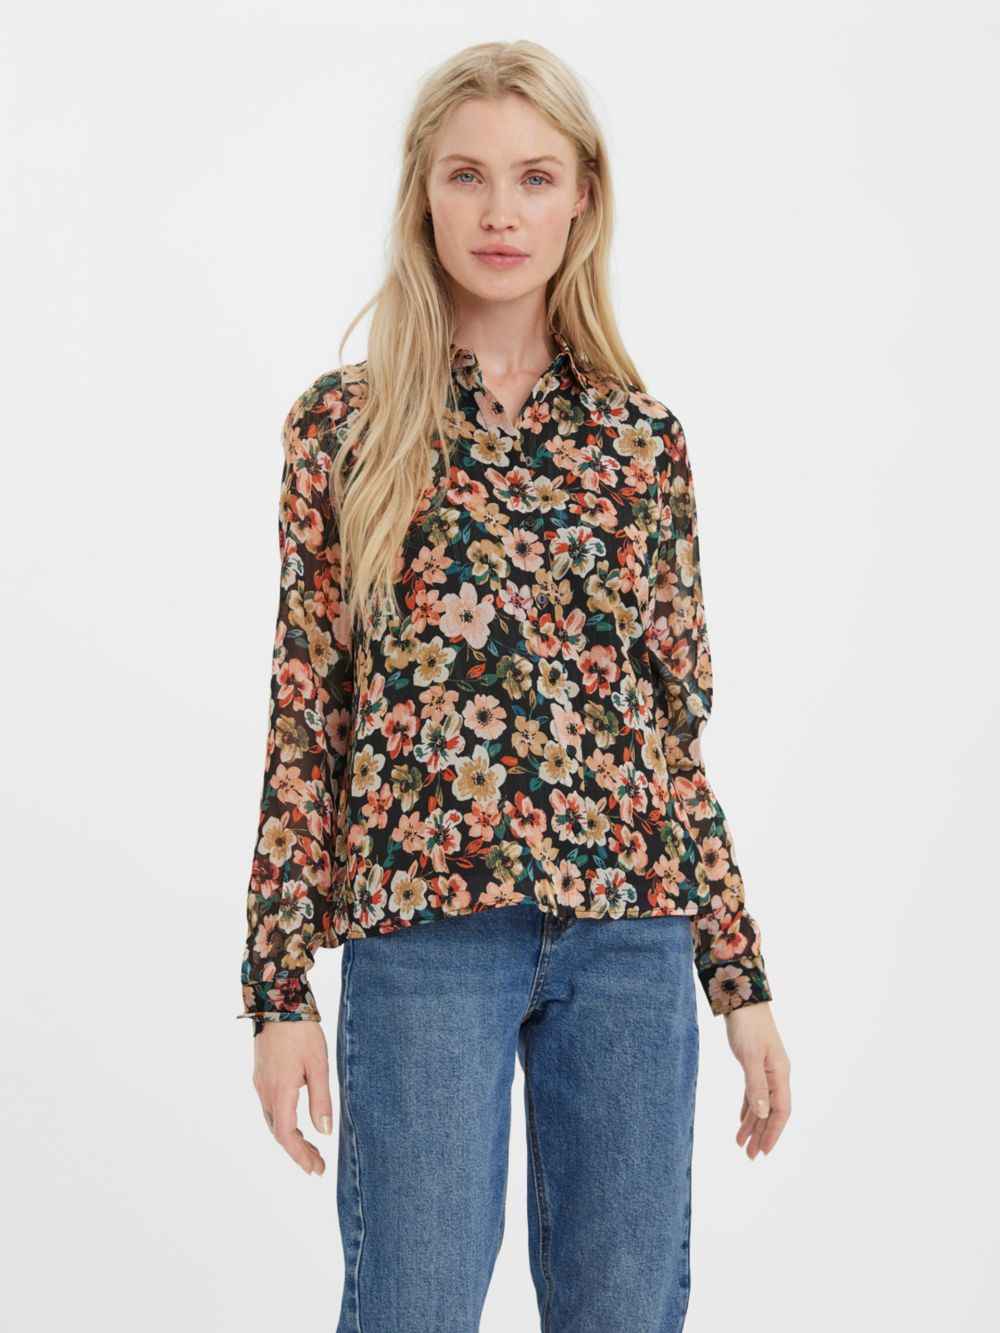 chemise-vero moda-kaya-noir-rose-fleuri-lurex-manche-longue-col chemise